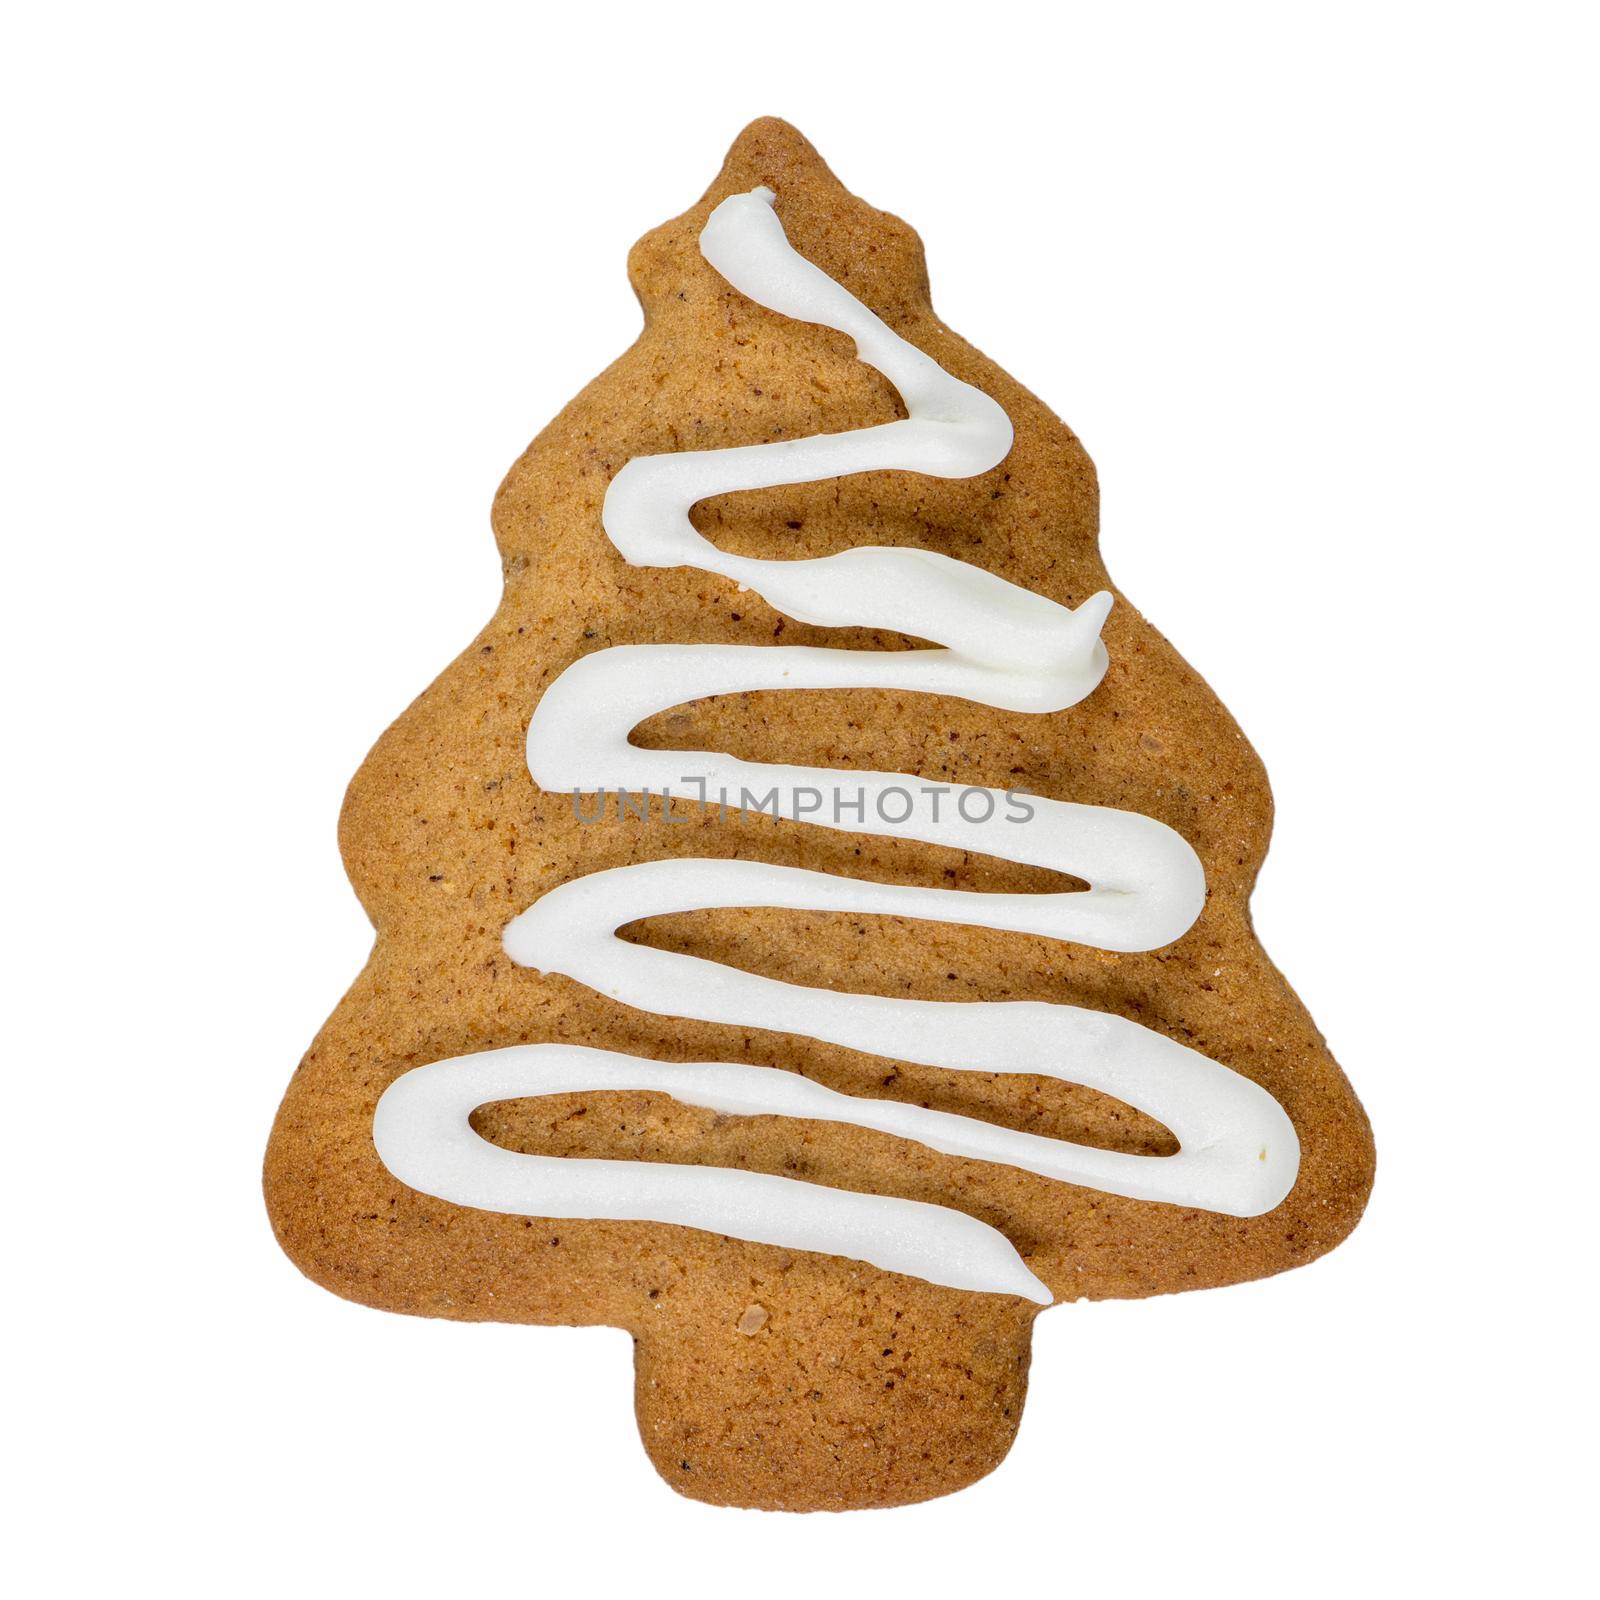 Gingerbread Christmas tree cookie by homydesign